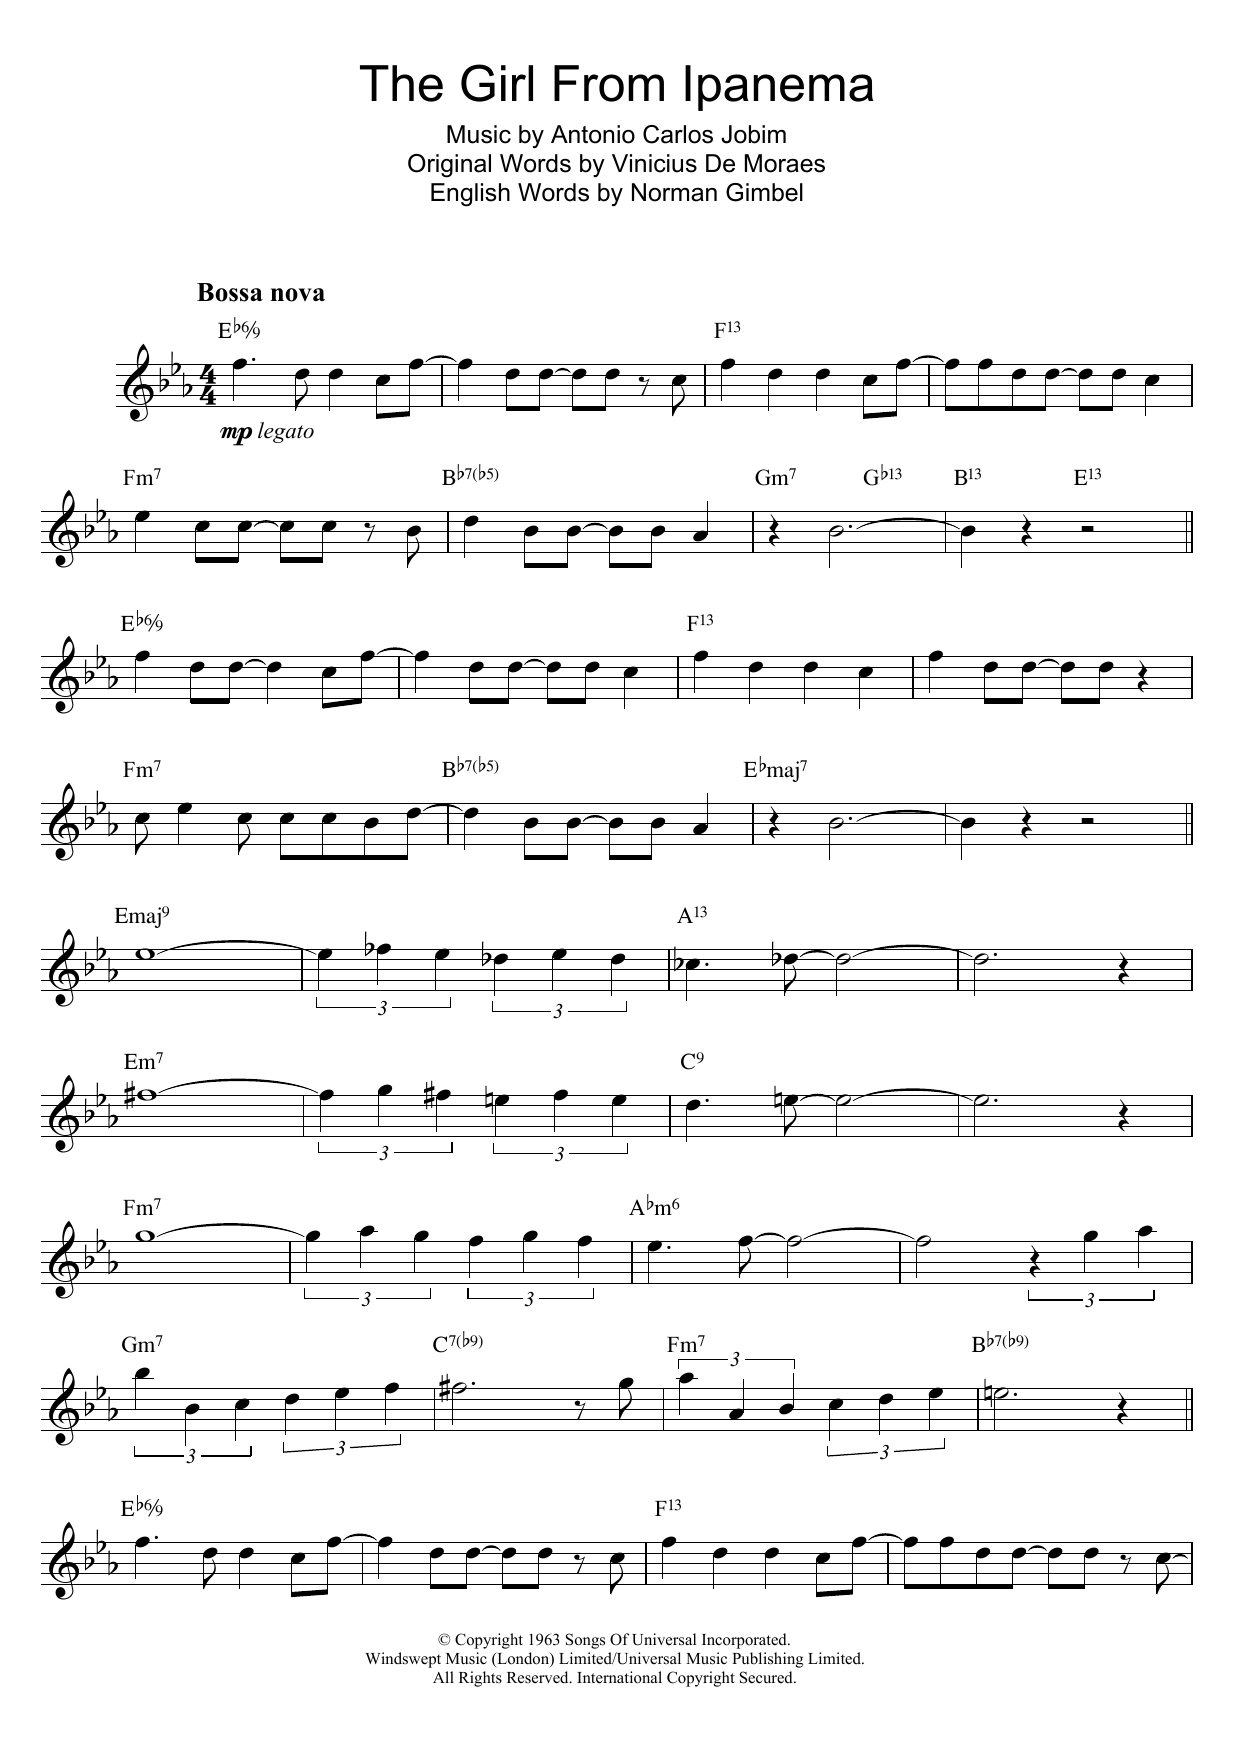 Download Antonio Carlos Jobim The Girl From Ipanema (Garota De Ipanema) Sheet Music and learn how to play Tenor Saxophone PDF digital score in minutes